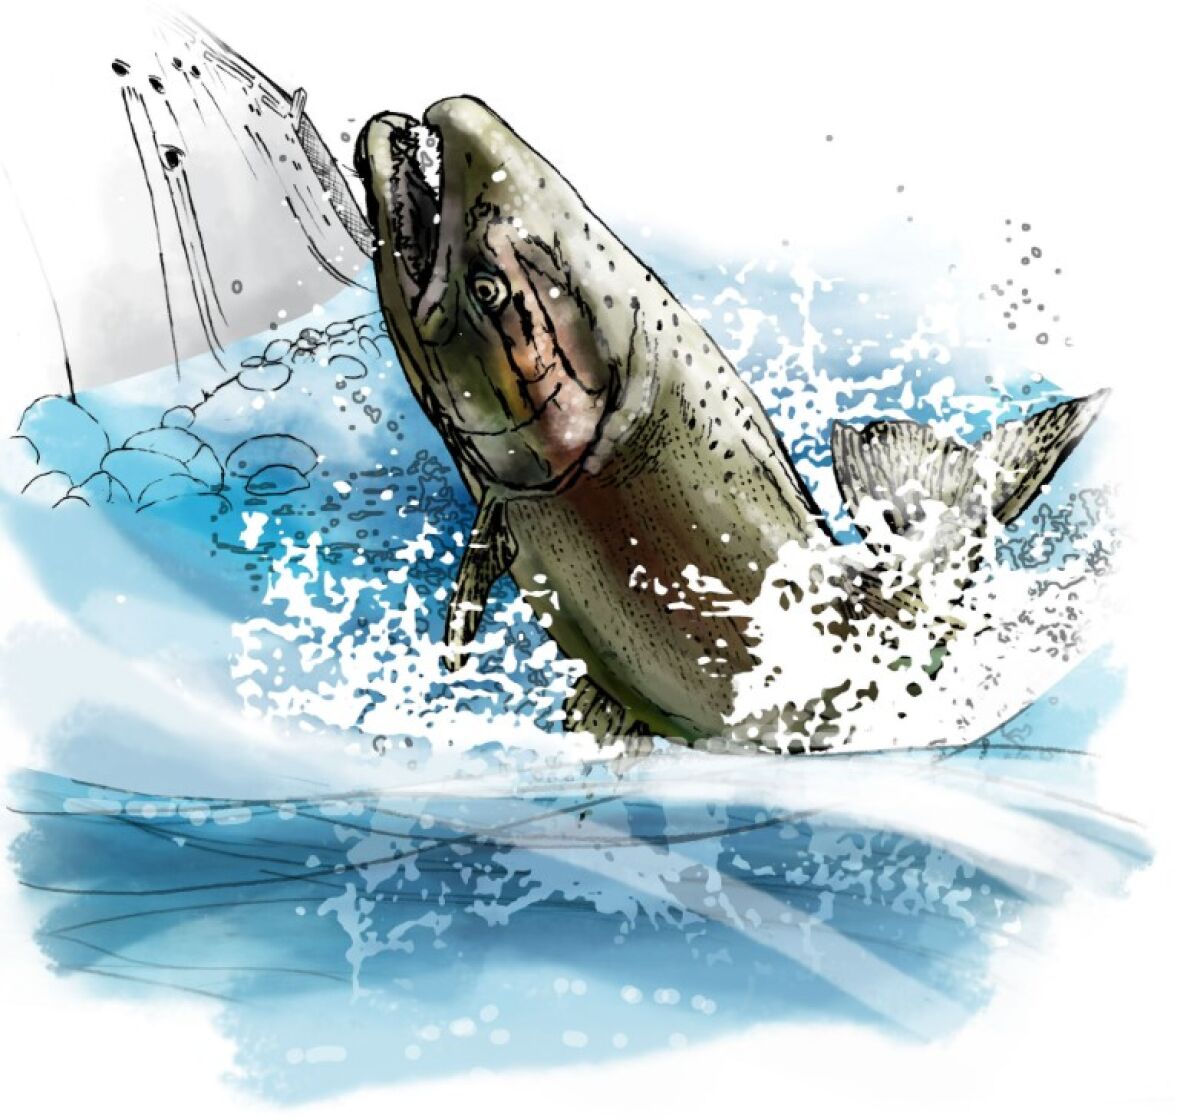 Illustration of a salmon splashing in water.